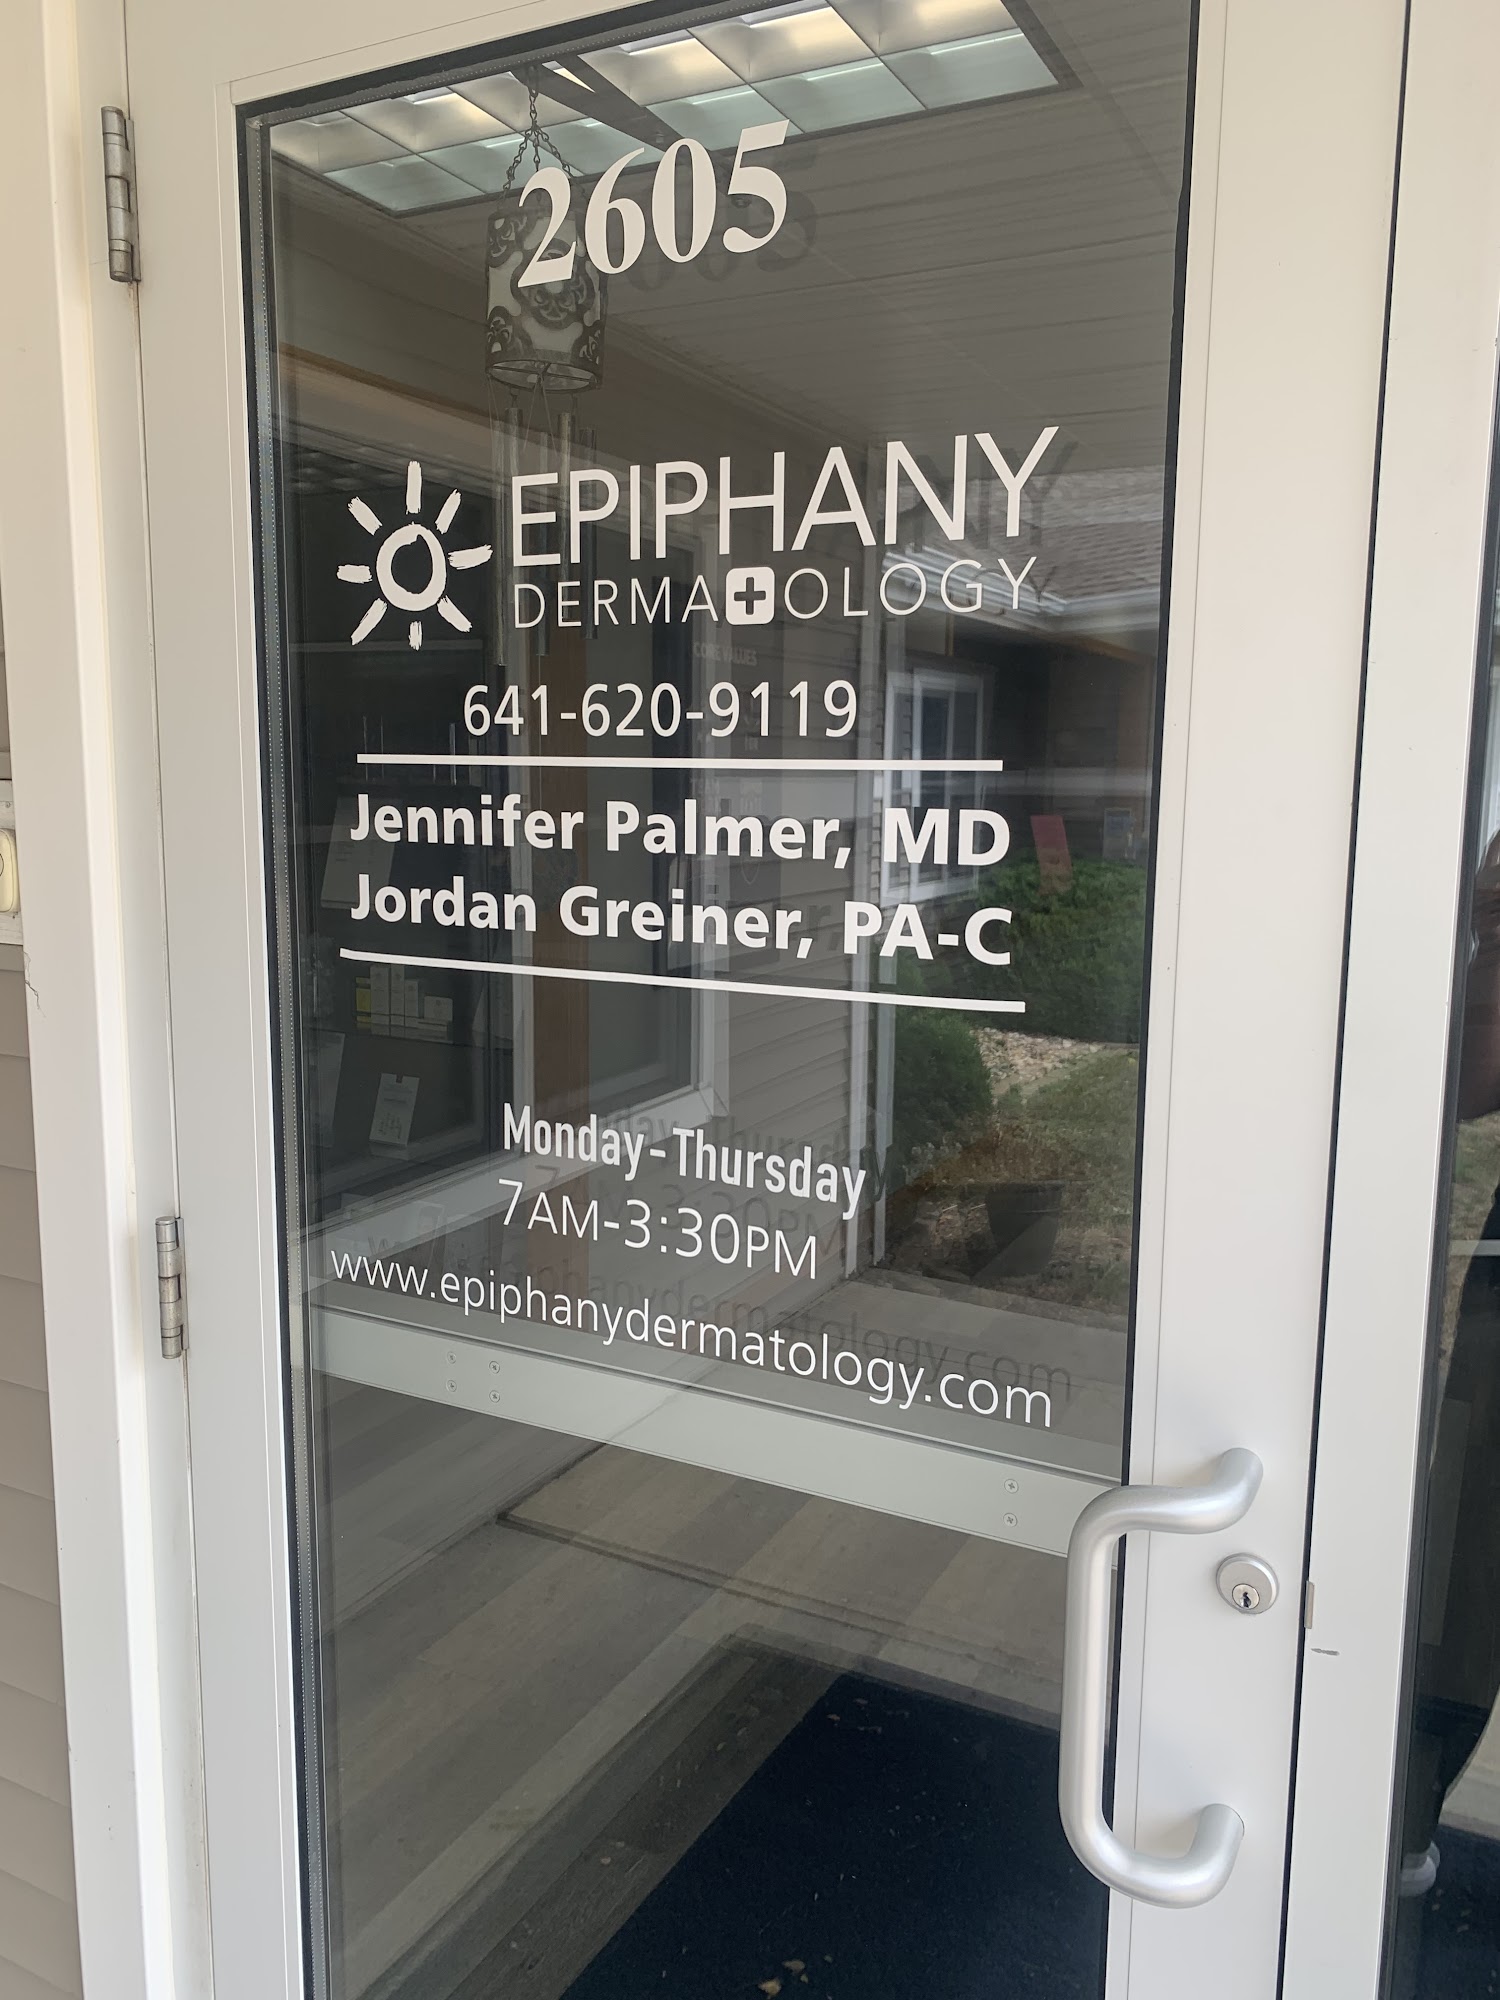 Epiphany Dermatology 2605 Washington St, Pella Iowa 50219